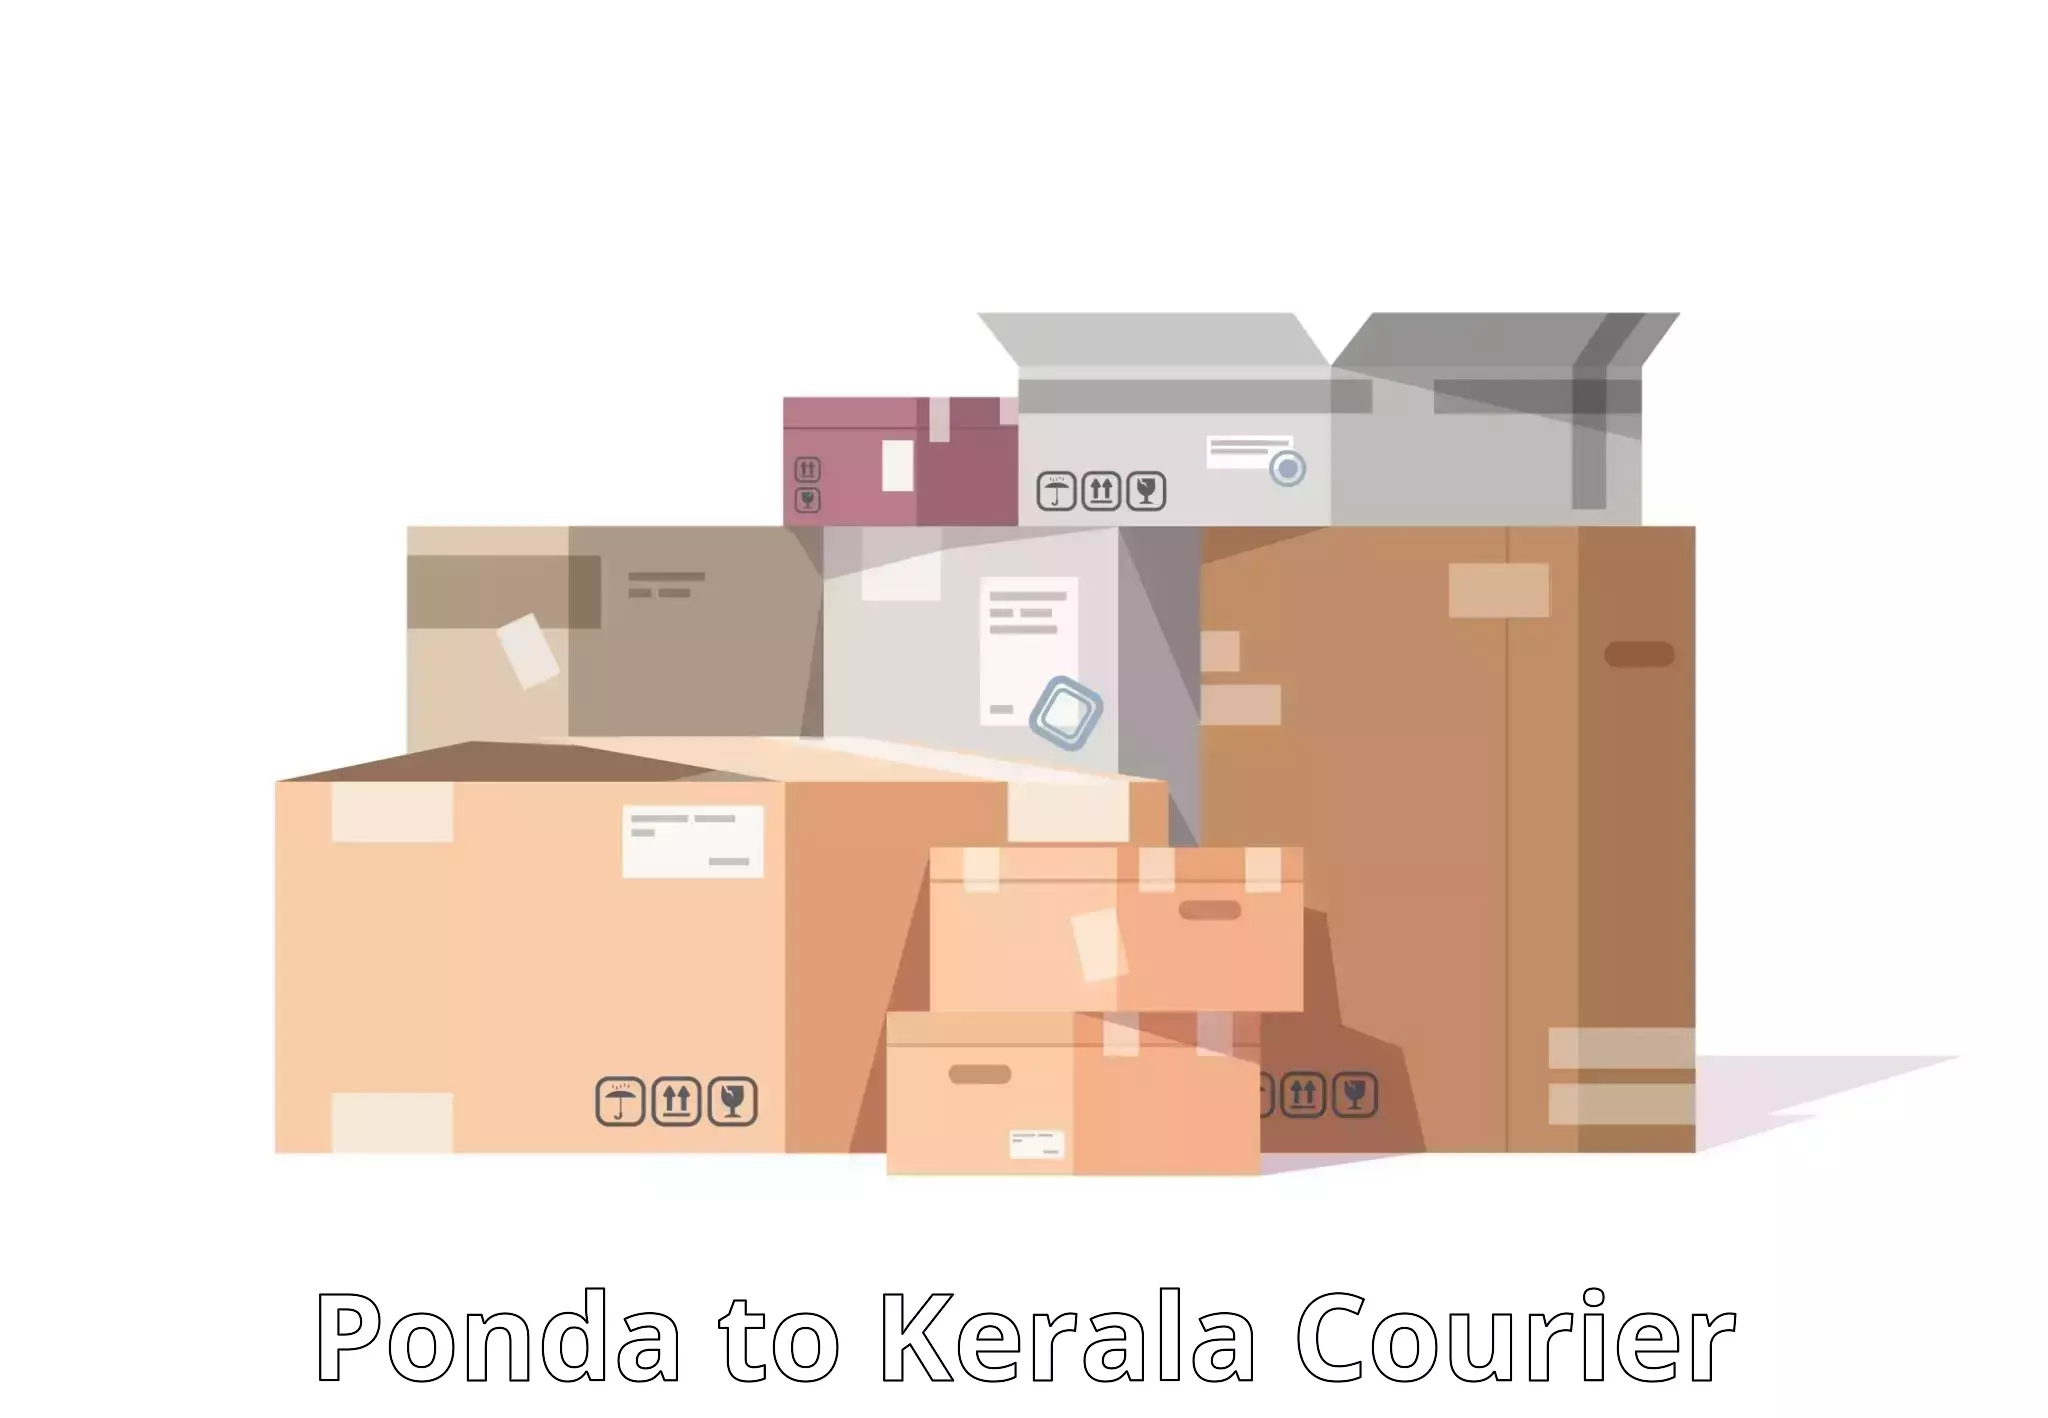 Same-day delivery options Ponda to Cochin Port Kochi